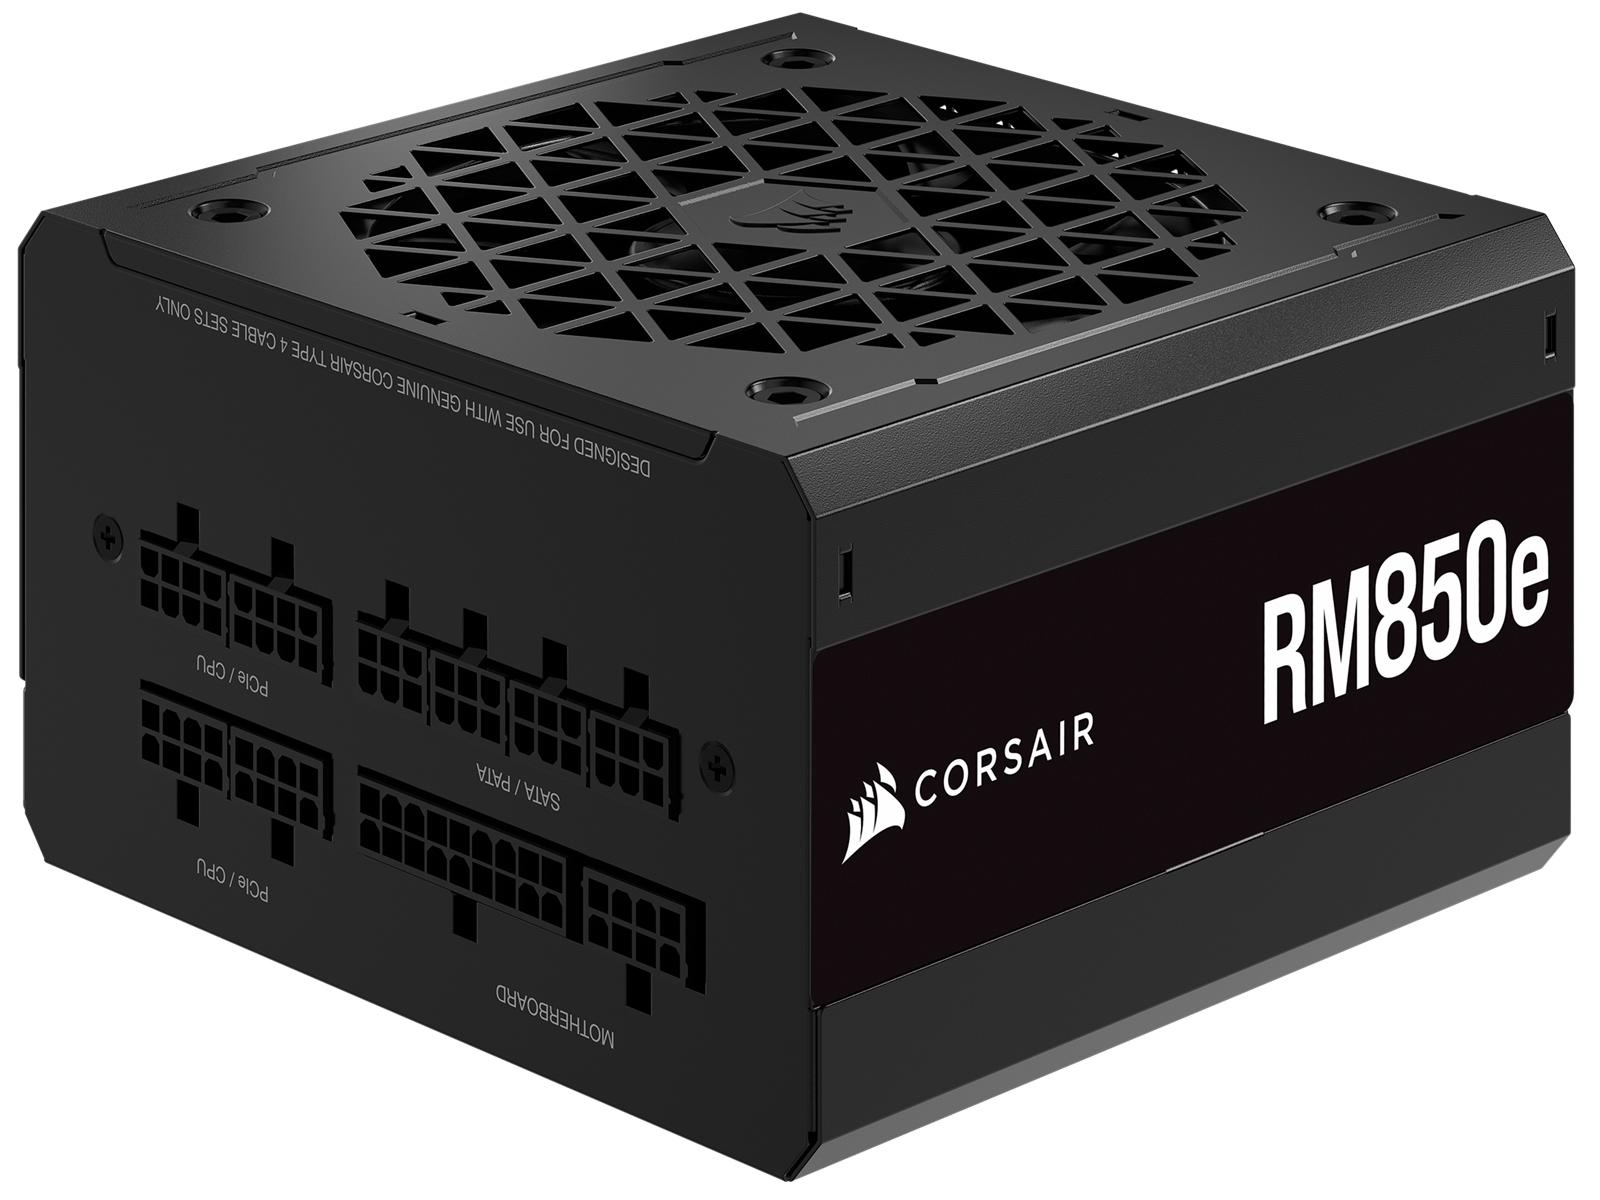 Corsair Netzteil RM850e V2 – 850 W – 80+ Gold ATX 3.0 